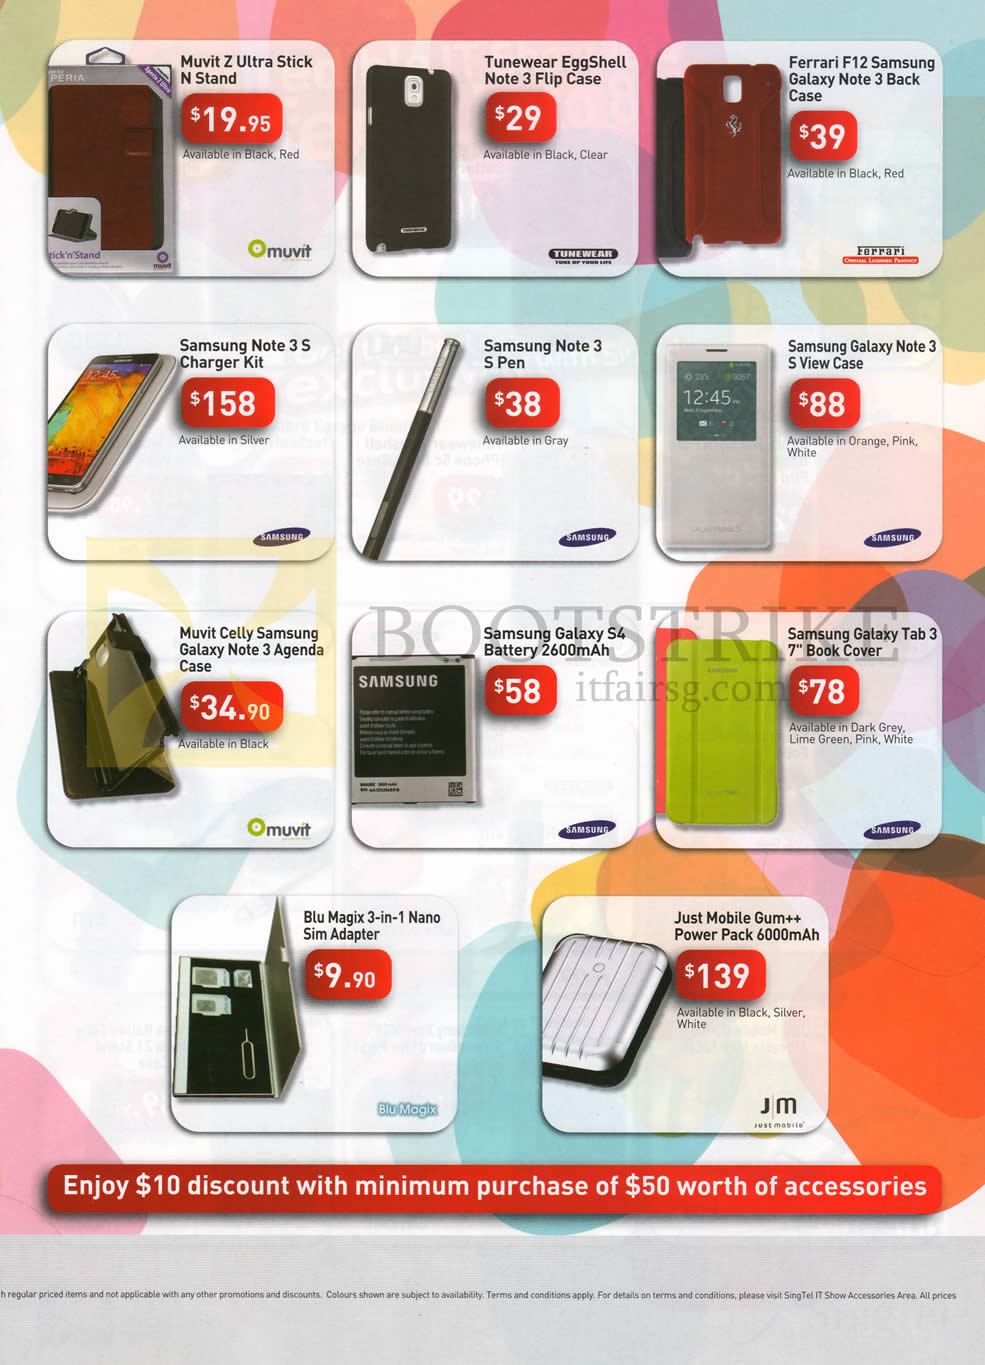 IT SHOW 2014 price list image brochure of Singtel Accessories Flip Cases, Back Cases, Samsung Note S Pen, Sim Adapter, Power Pack, Tuneswear, Ferrari, Blu Magix